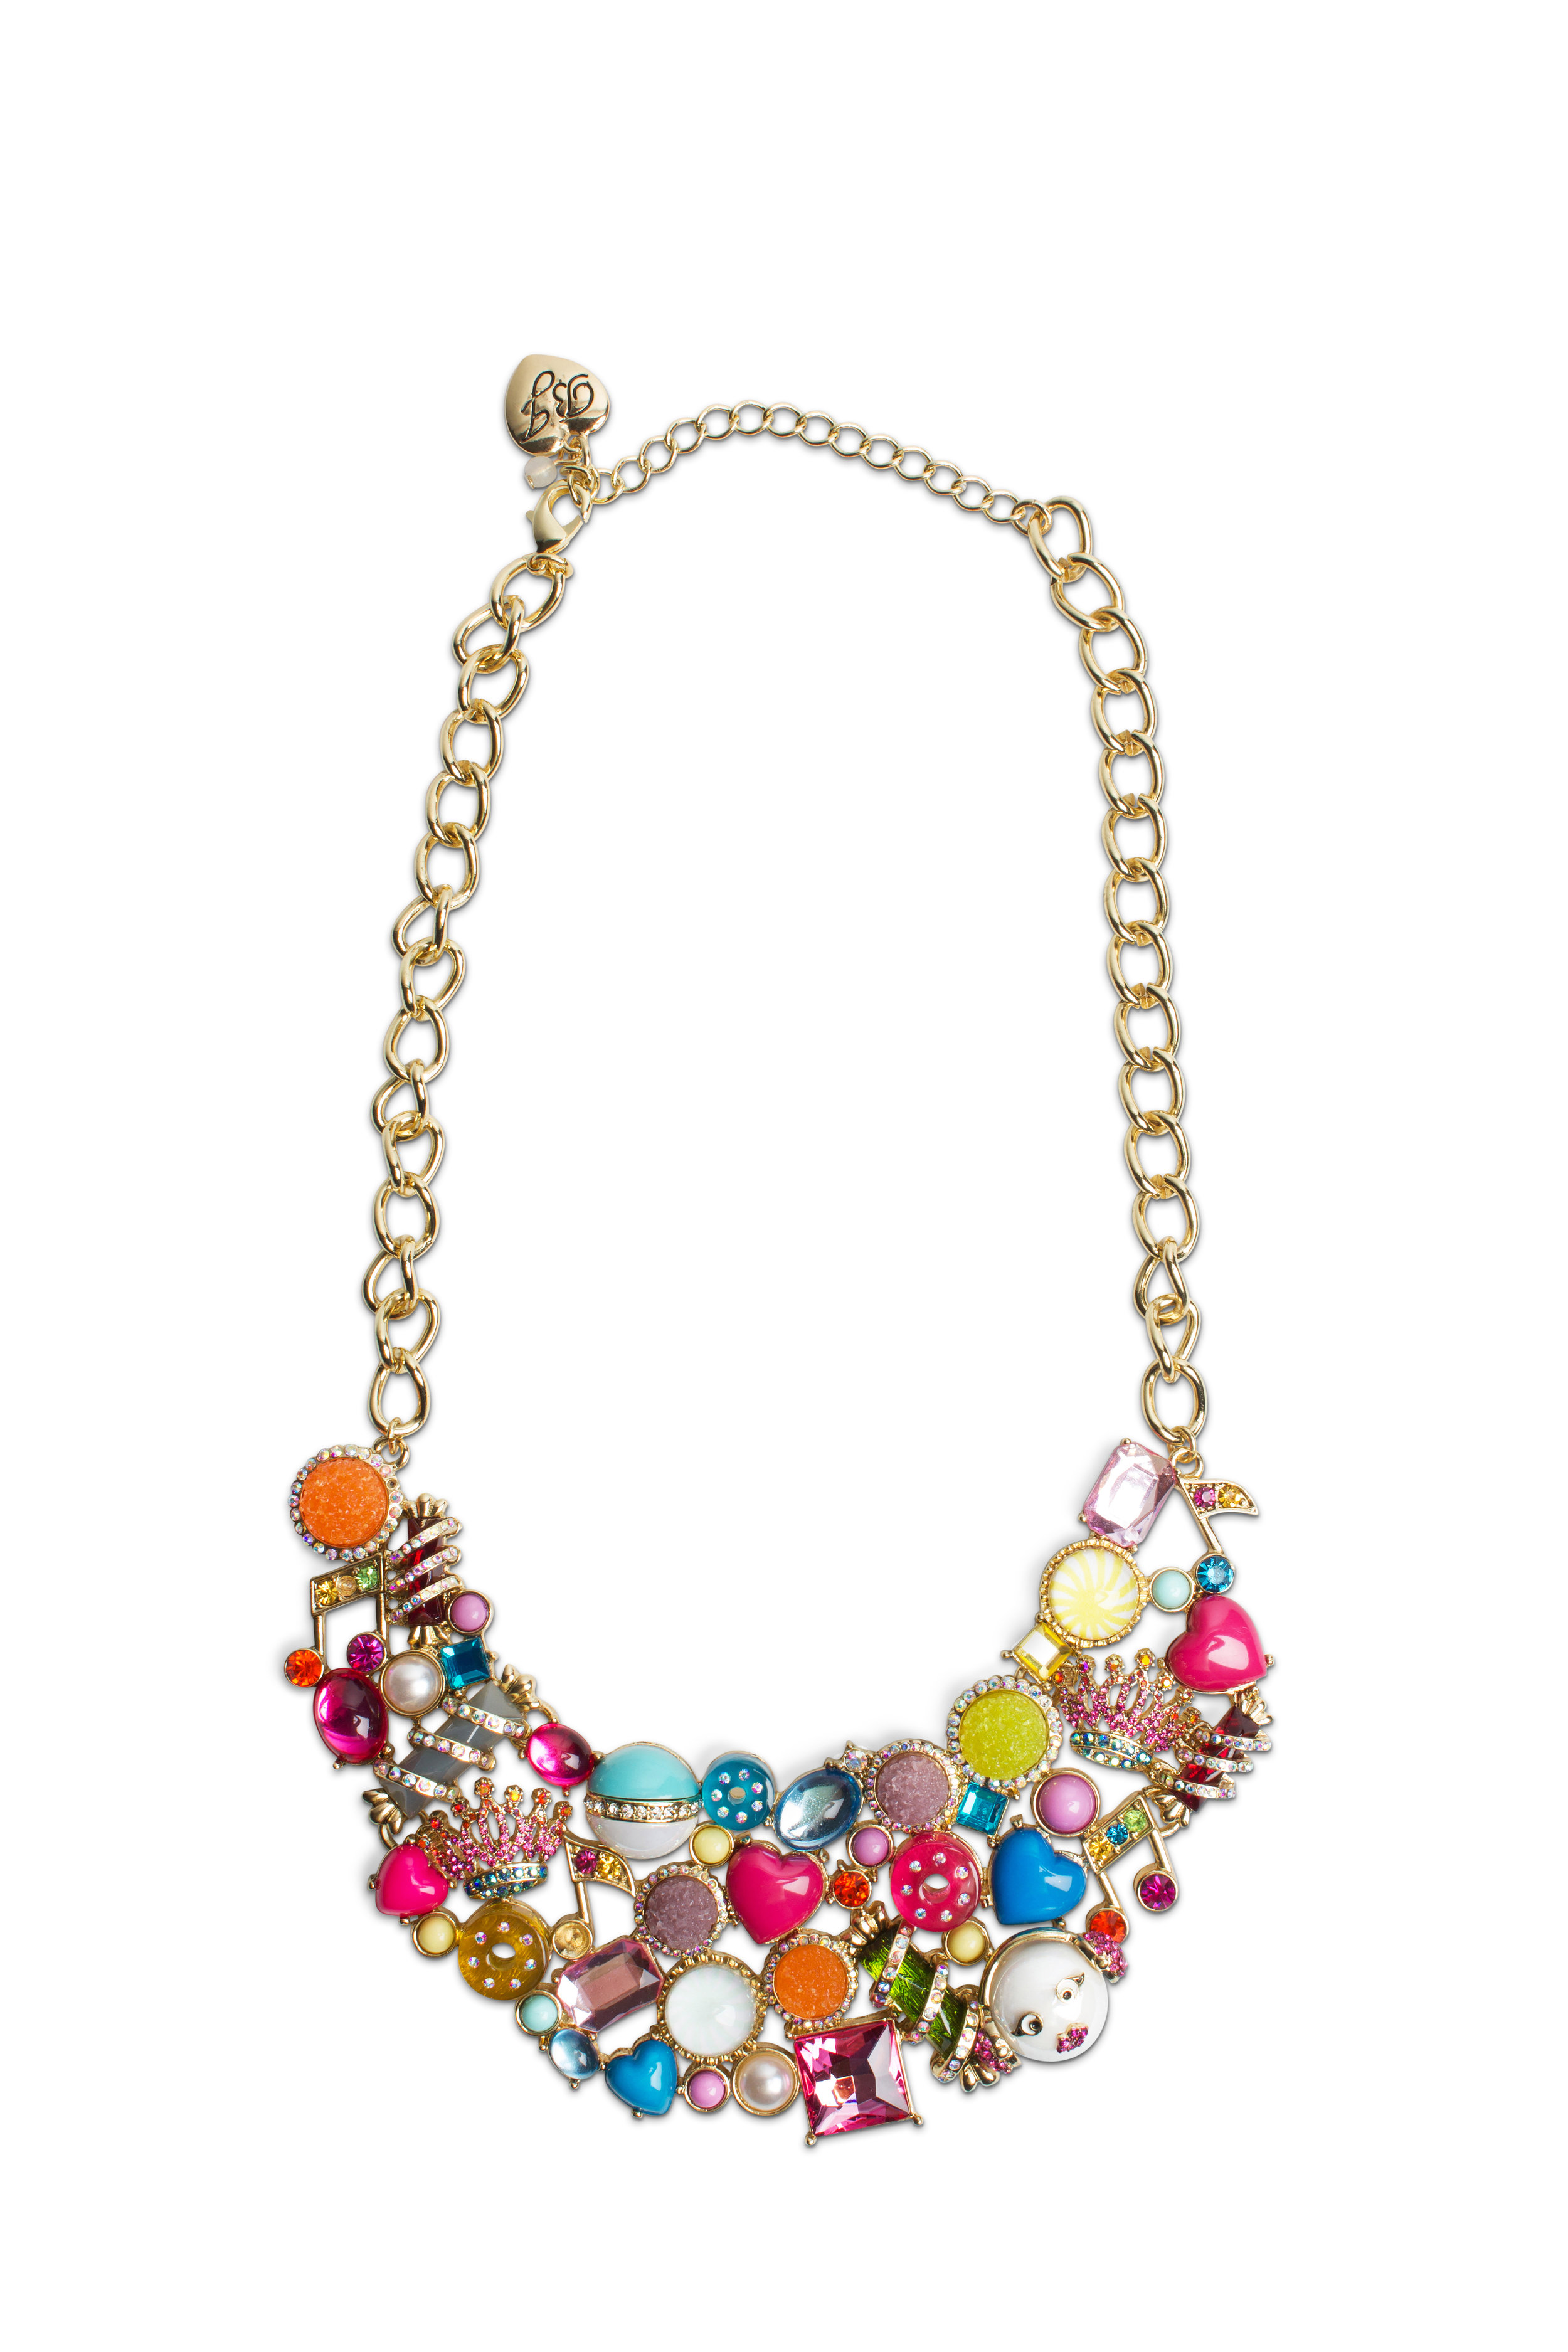 2-necklace-wite-bkg-f3.jpg